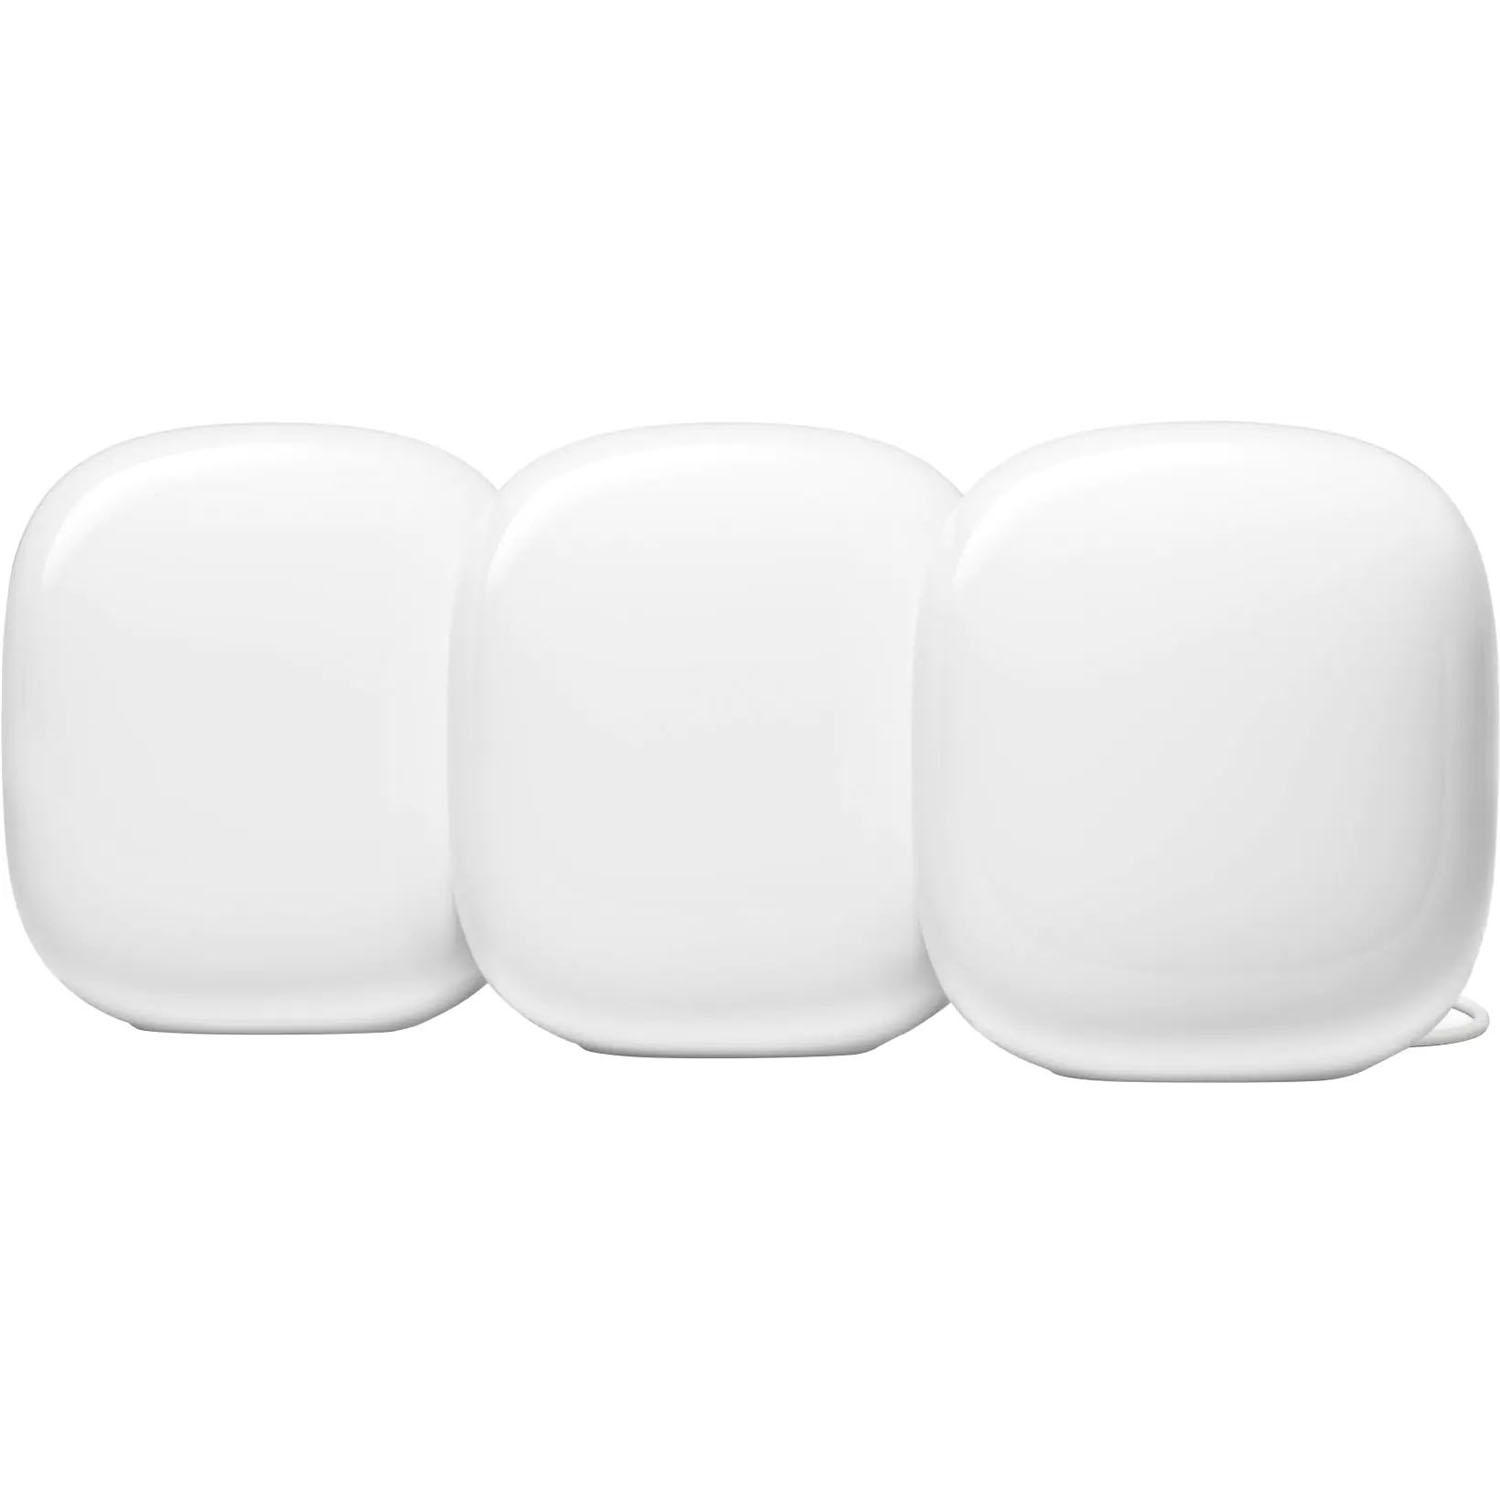 Google Nest WifI Pro 6E - 3 Pack Cotton White